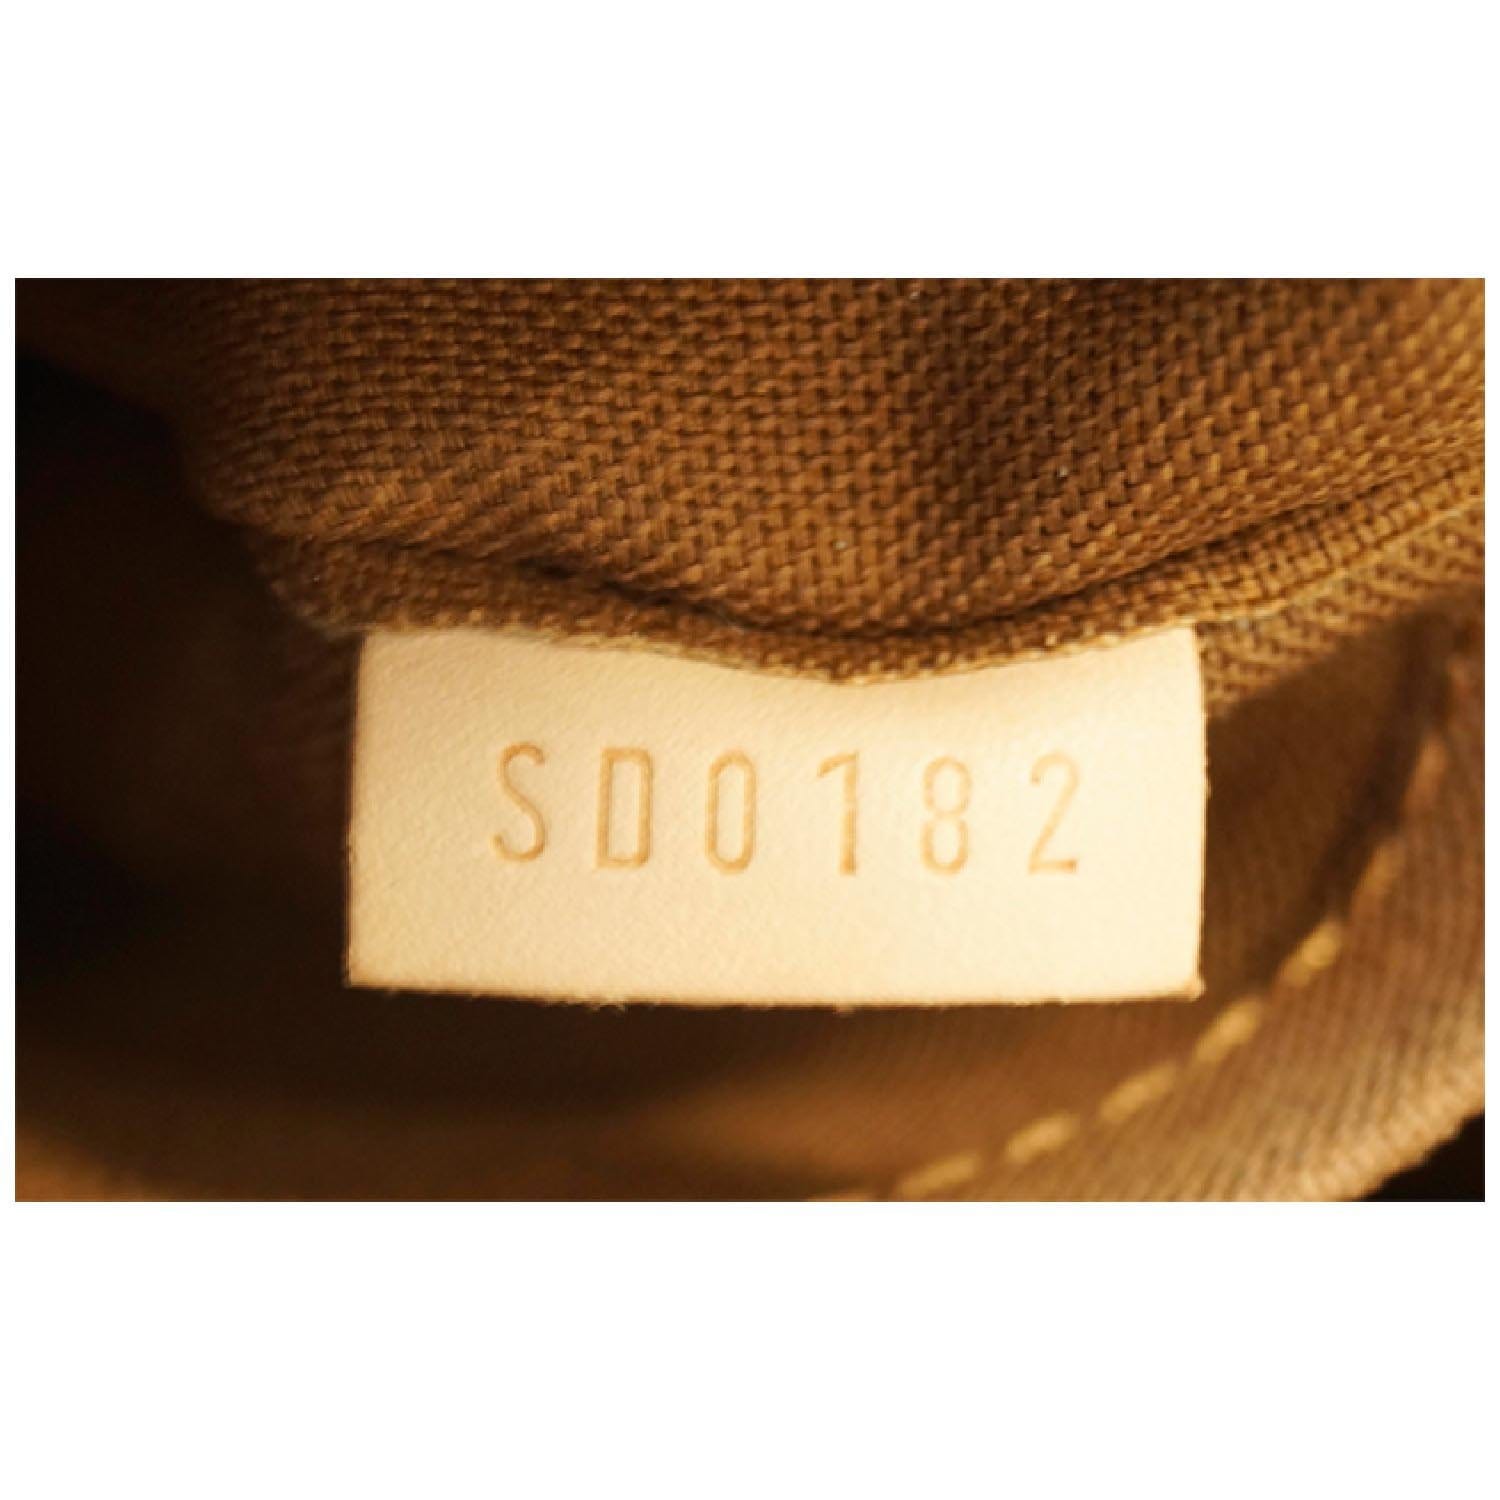 Louis Vuitton Monogram Galliera PM. Made in USA. Date code: SD0182